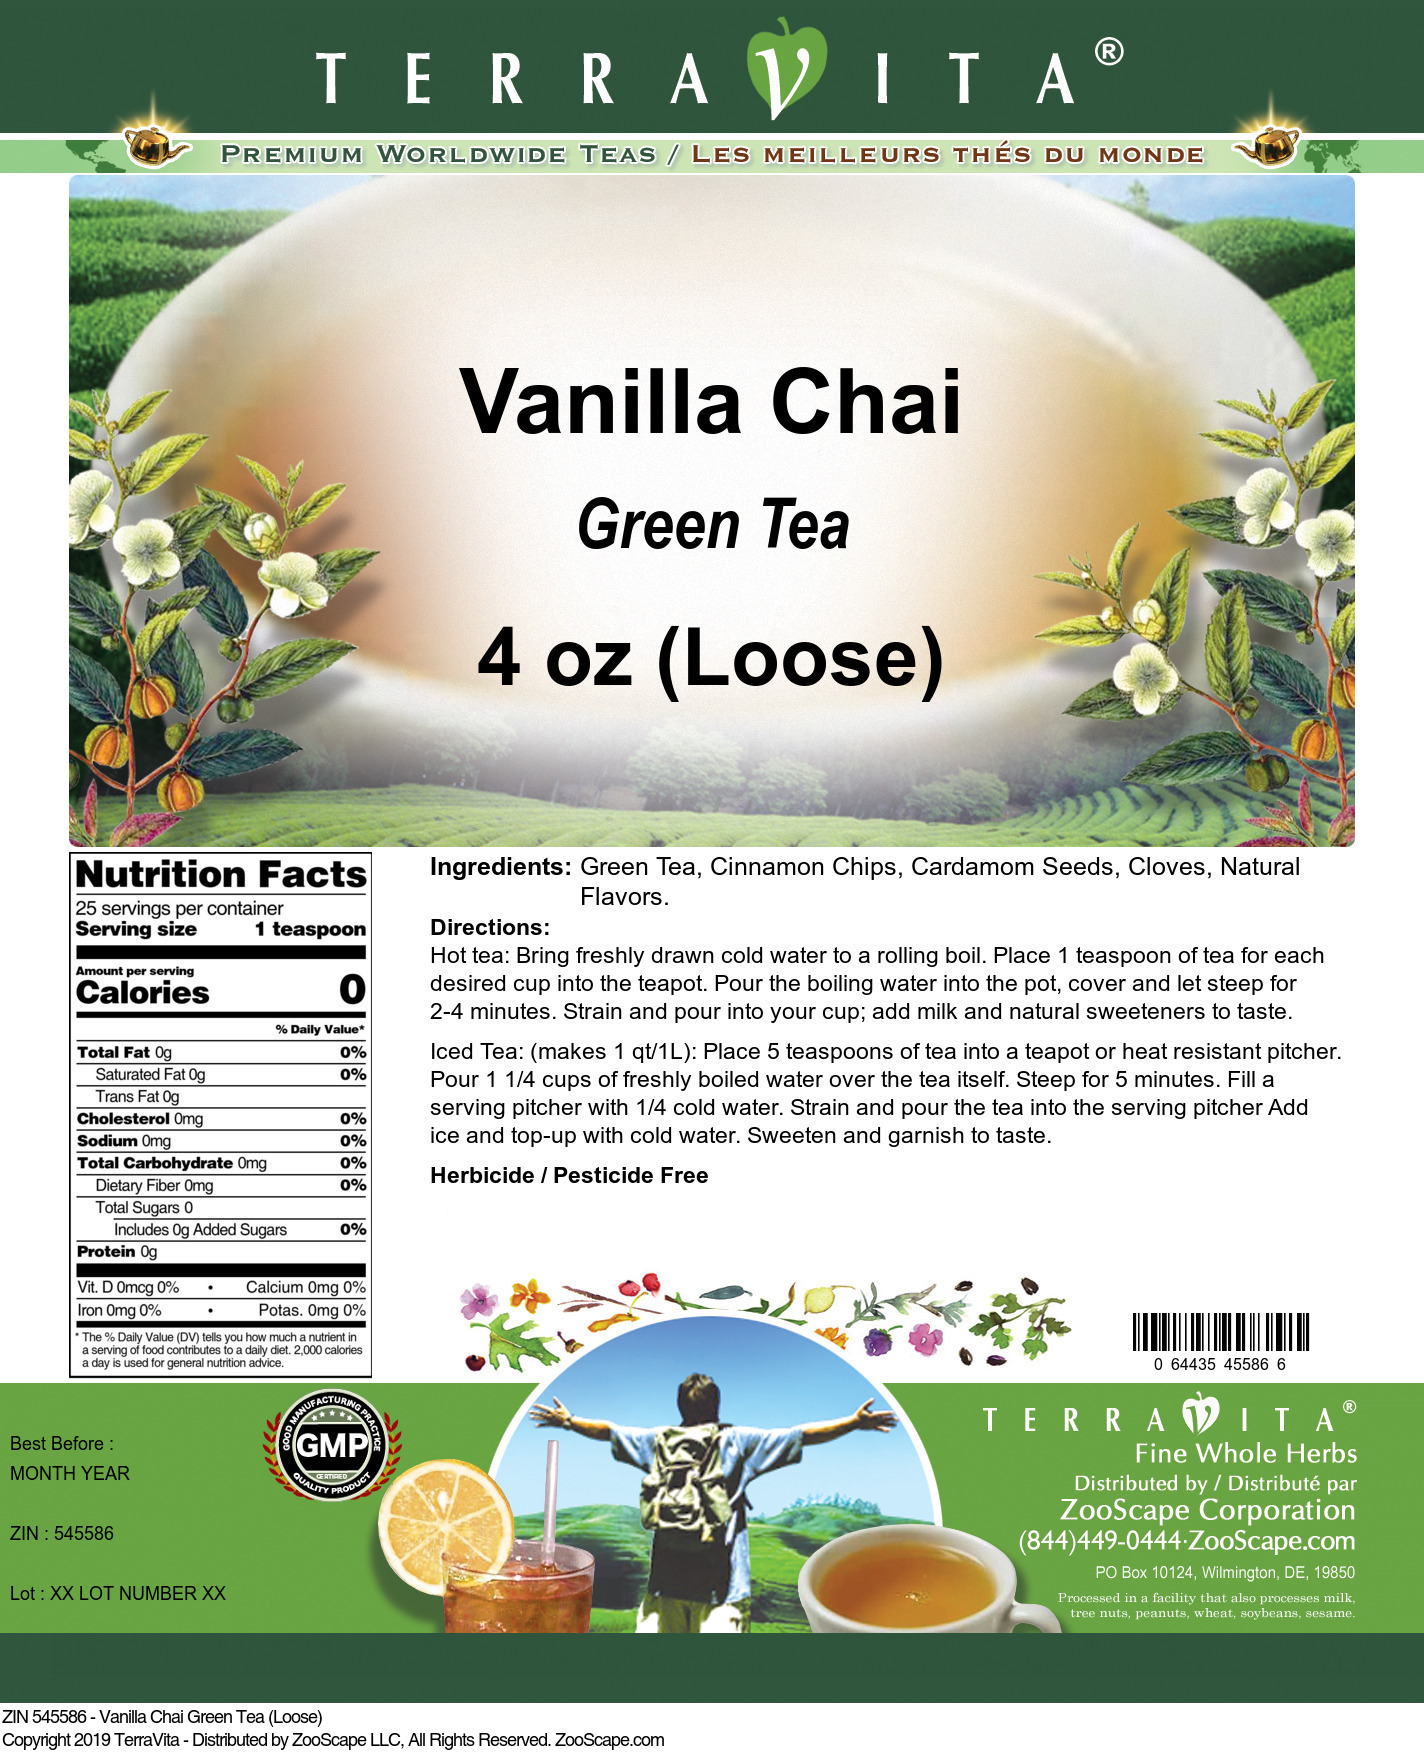 Vanilla Chai Green Tea (Loose) - Label